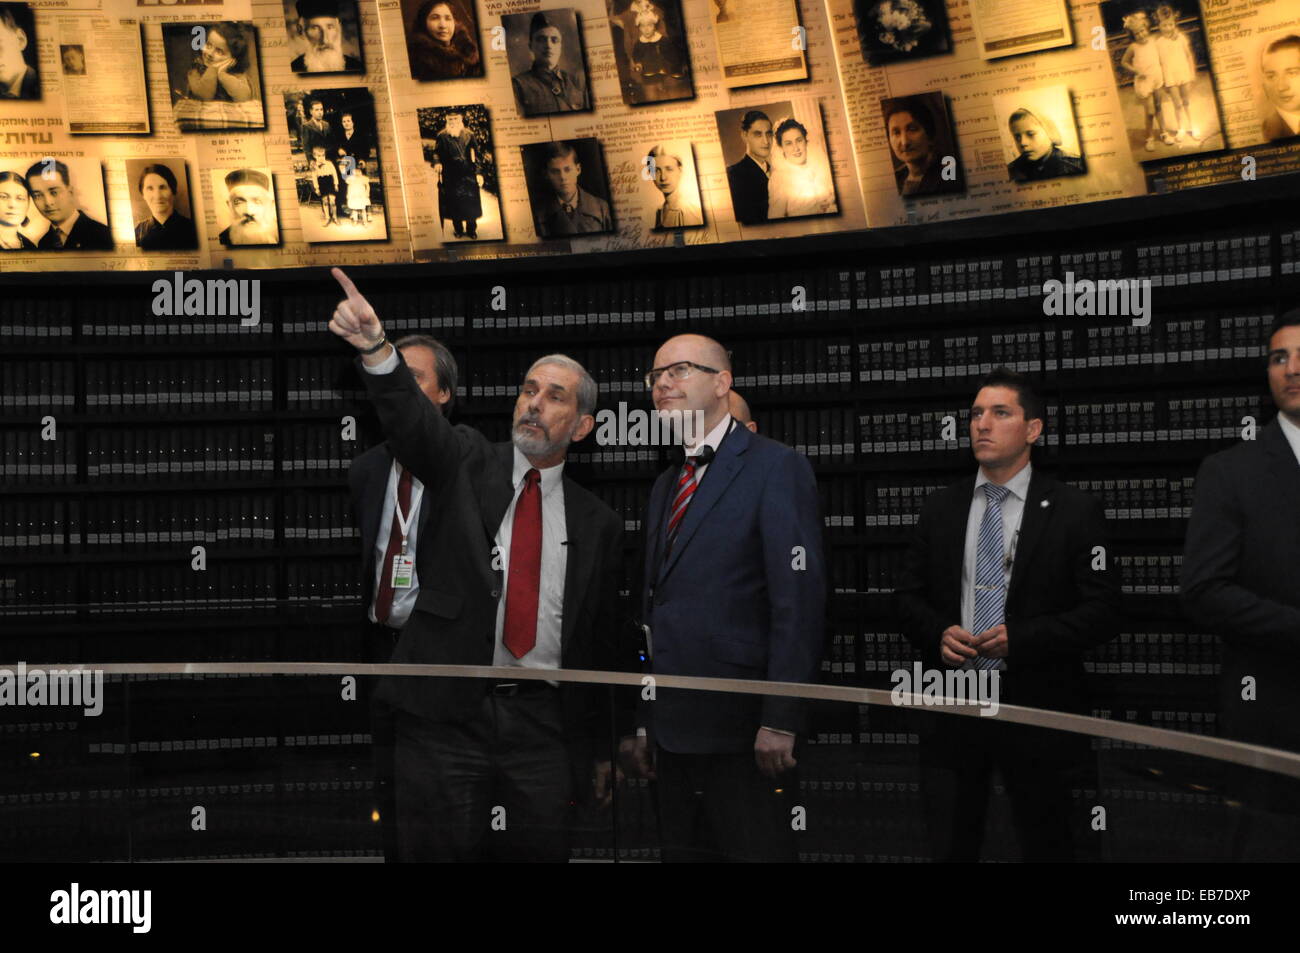 Czech Prime Minister Bohuslav Sobotka (centre with glasses) visits the Holocaust victims Yad Vashem memorial today, on Tuesday, November 25, 2014. Jerusalem, Israel © Sarka Dvorakova/CTK Photo/Alamy Live News Stock Photo